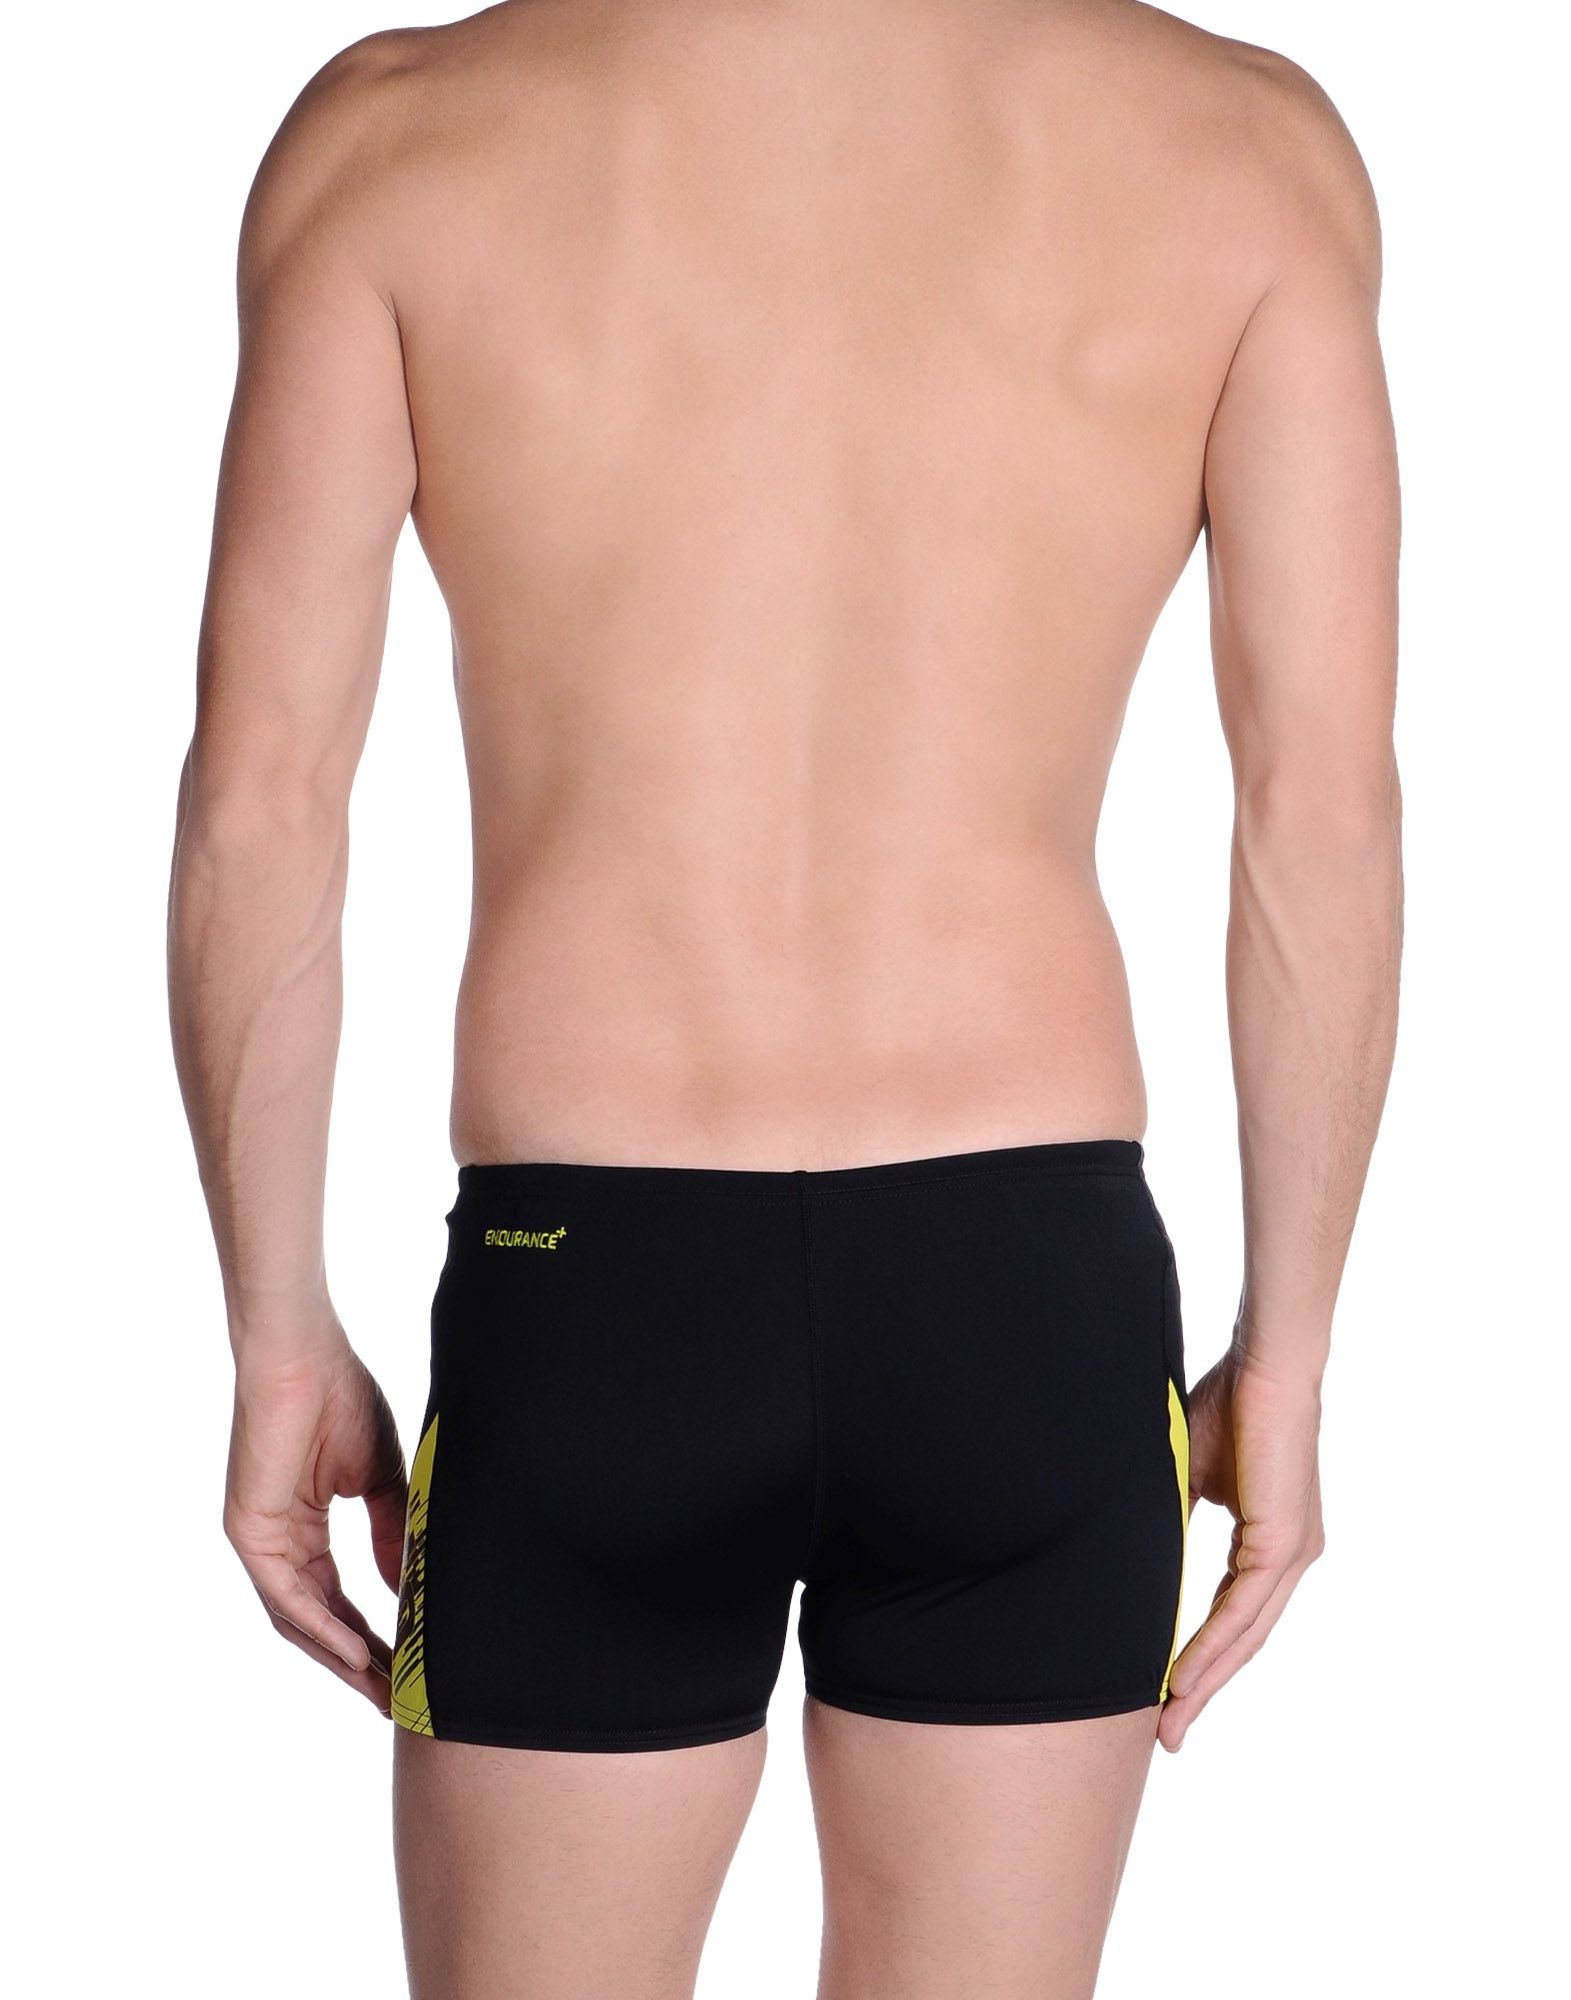 Speedo Synthetic Swimming Trunks in Yellow (Black) for Men - Lyst